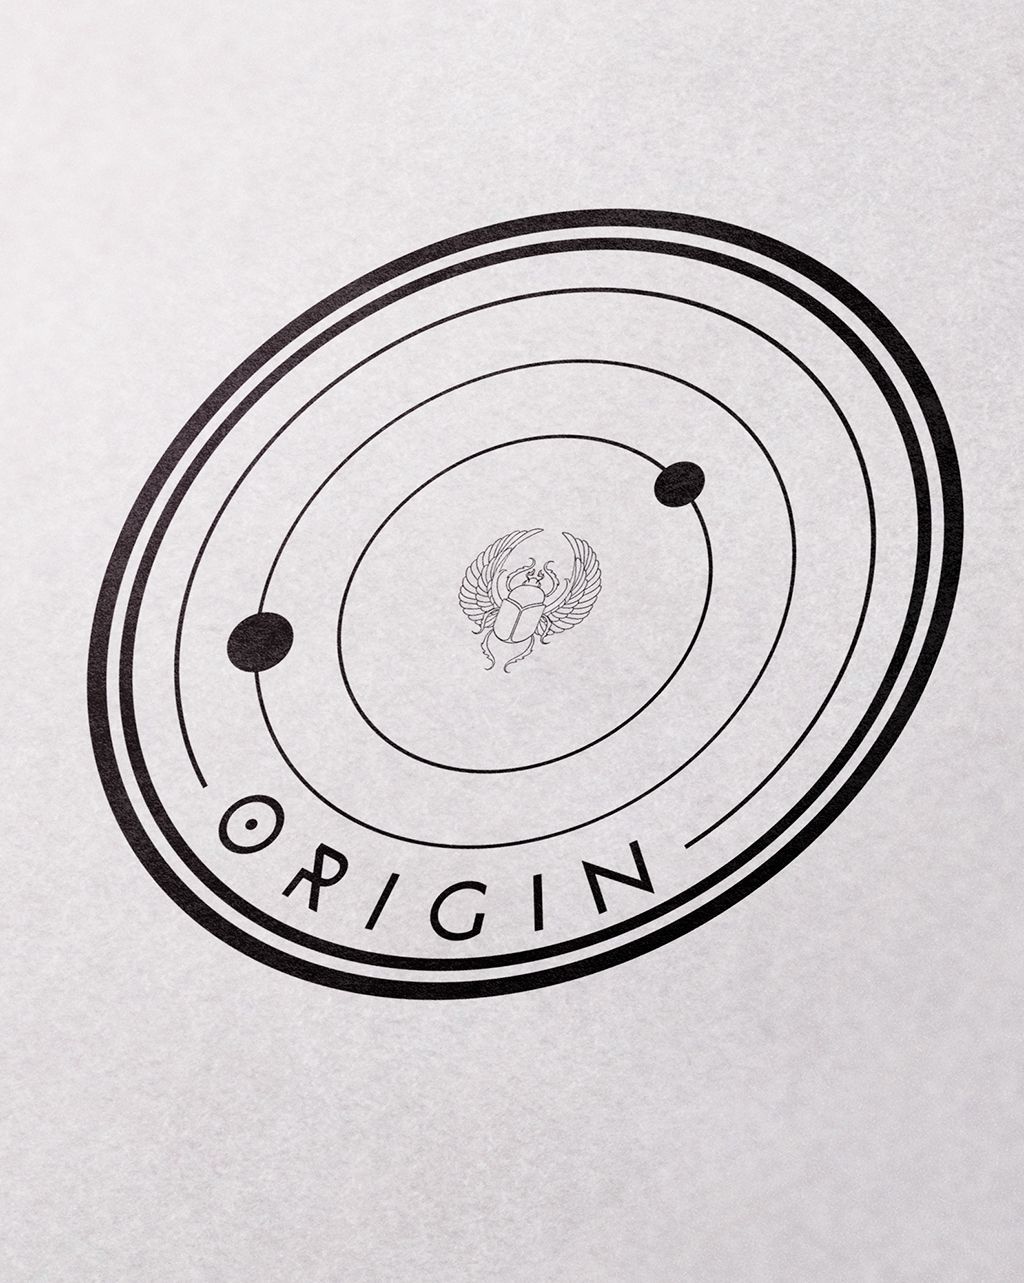 Logotipo Origin by ITCANph